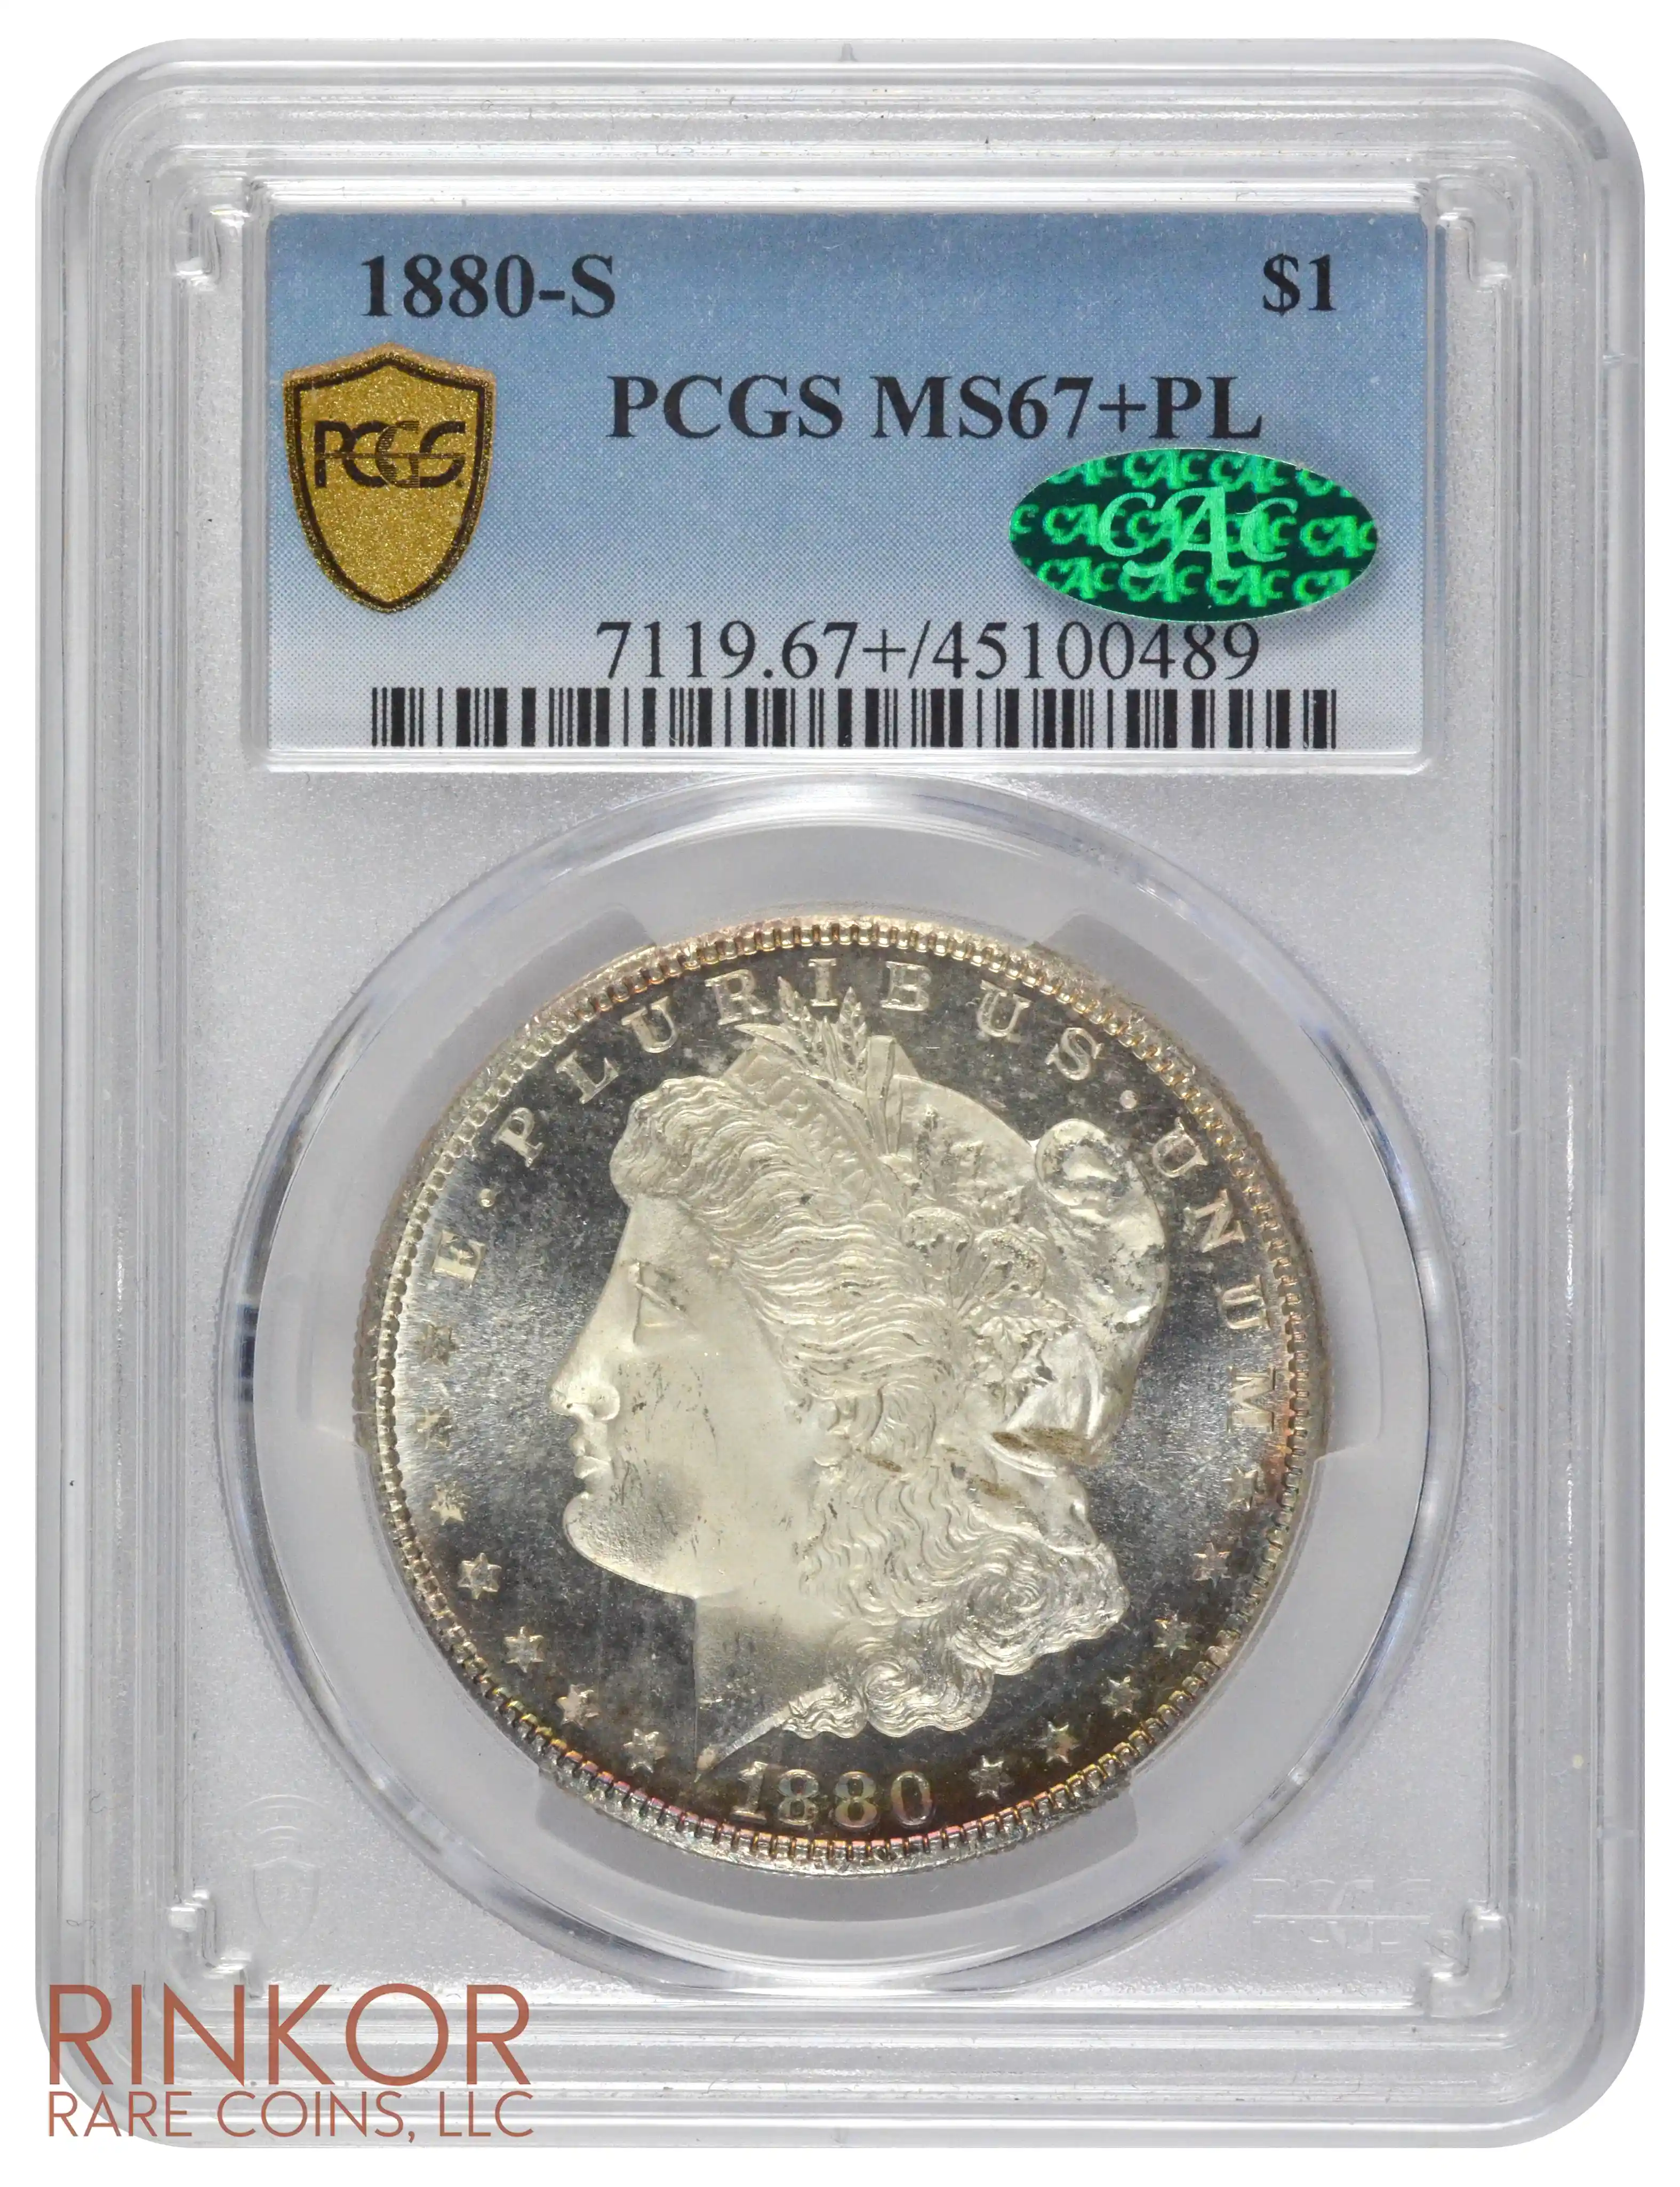 1880-S $1 PCGS MS 67+ PL CAC